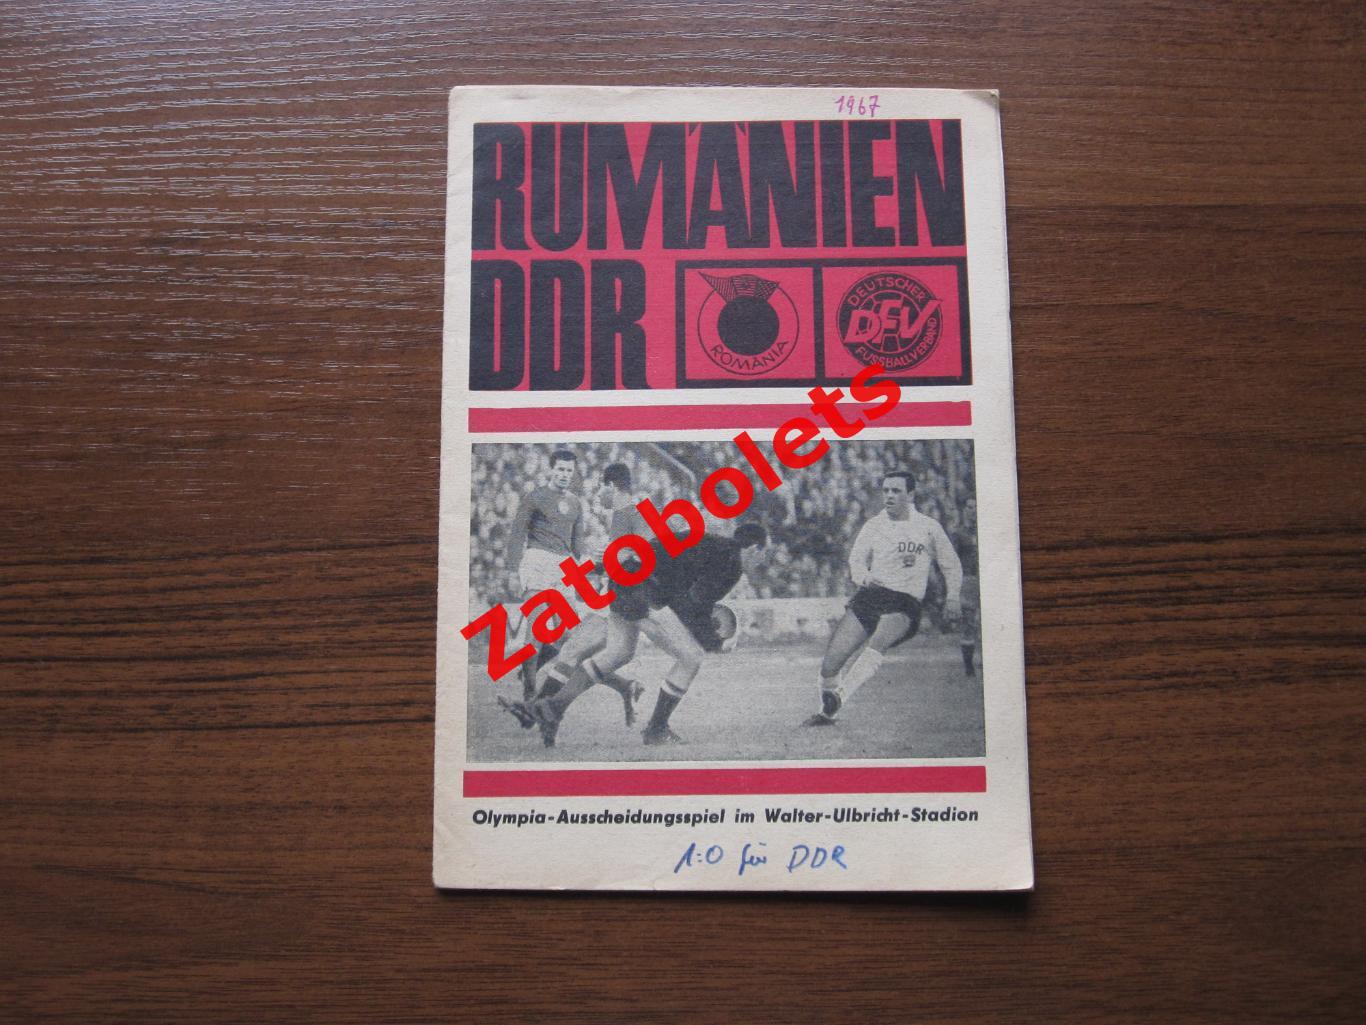 ГДР - Румыния 1967 Отборочный матч Олимпиады 1968 DDR/East Germany-Rumanien